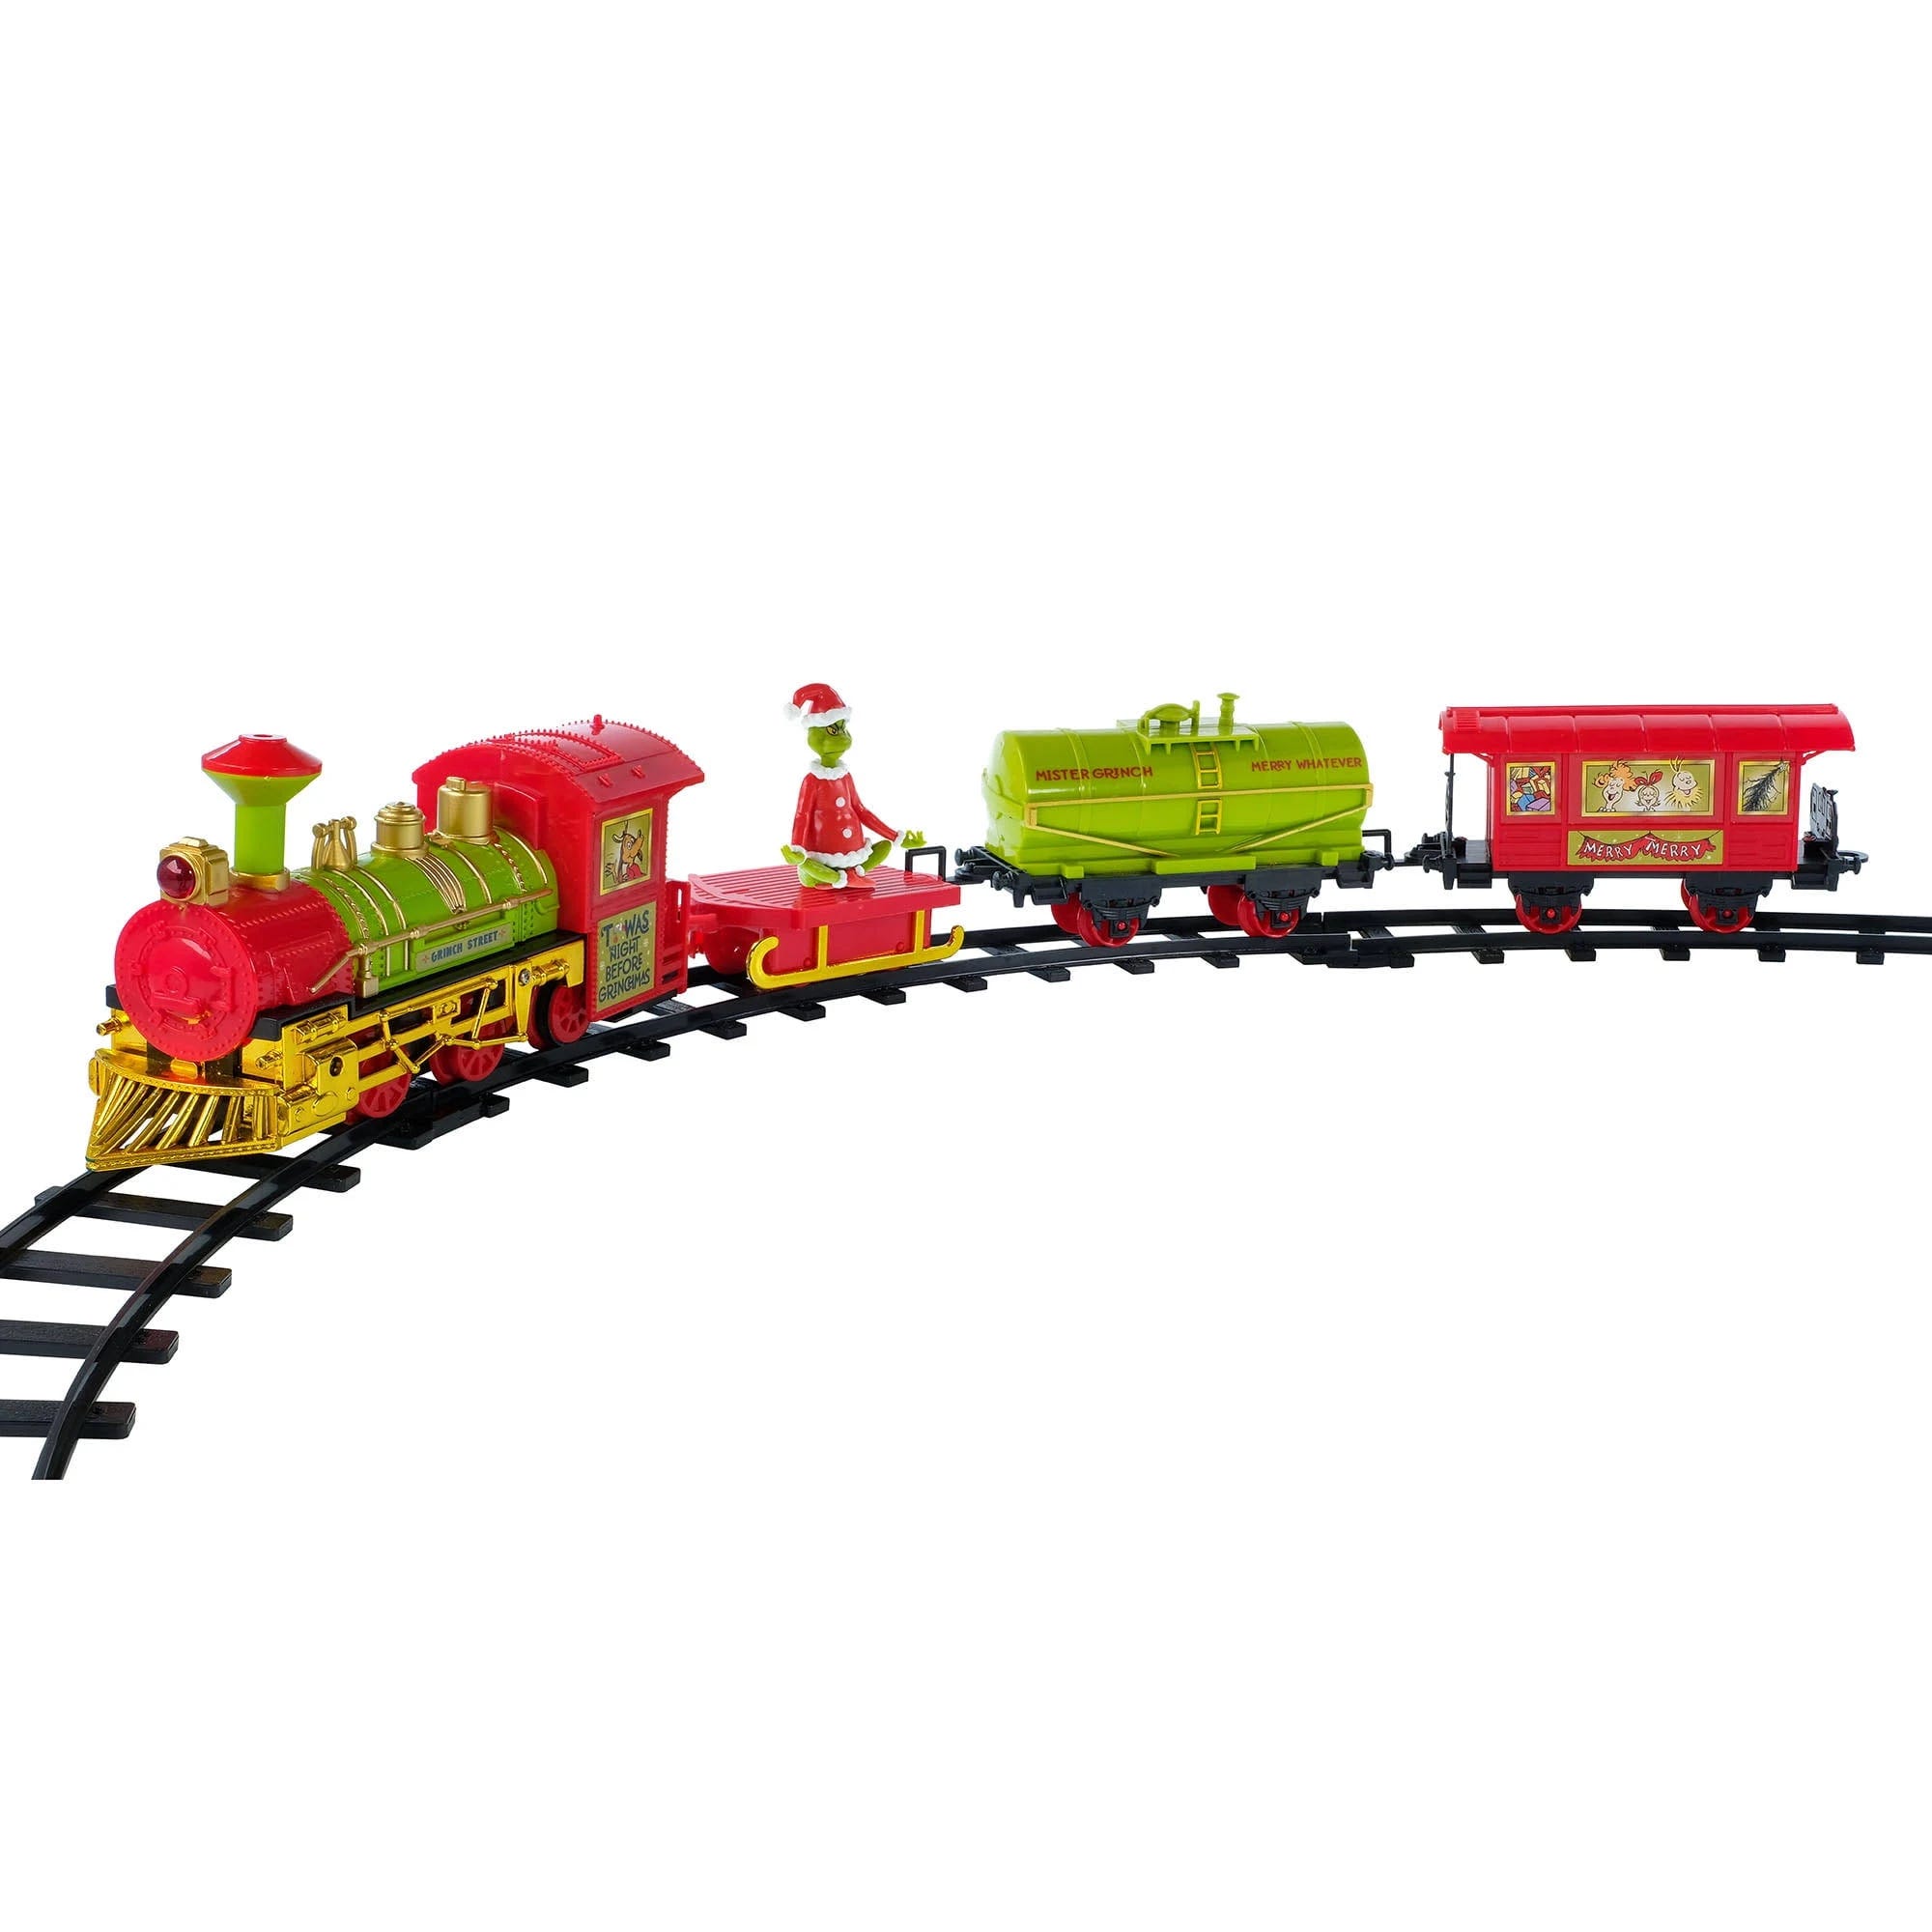 Dr. Seuss Grinch Express Train Toy Set: 12-Piece Playtime Fun | Image